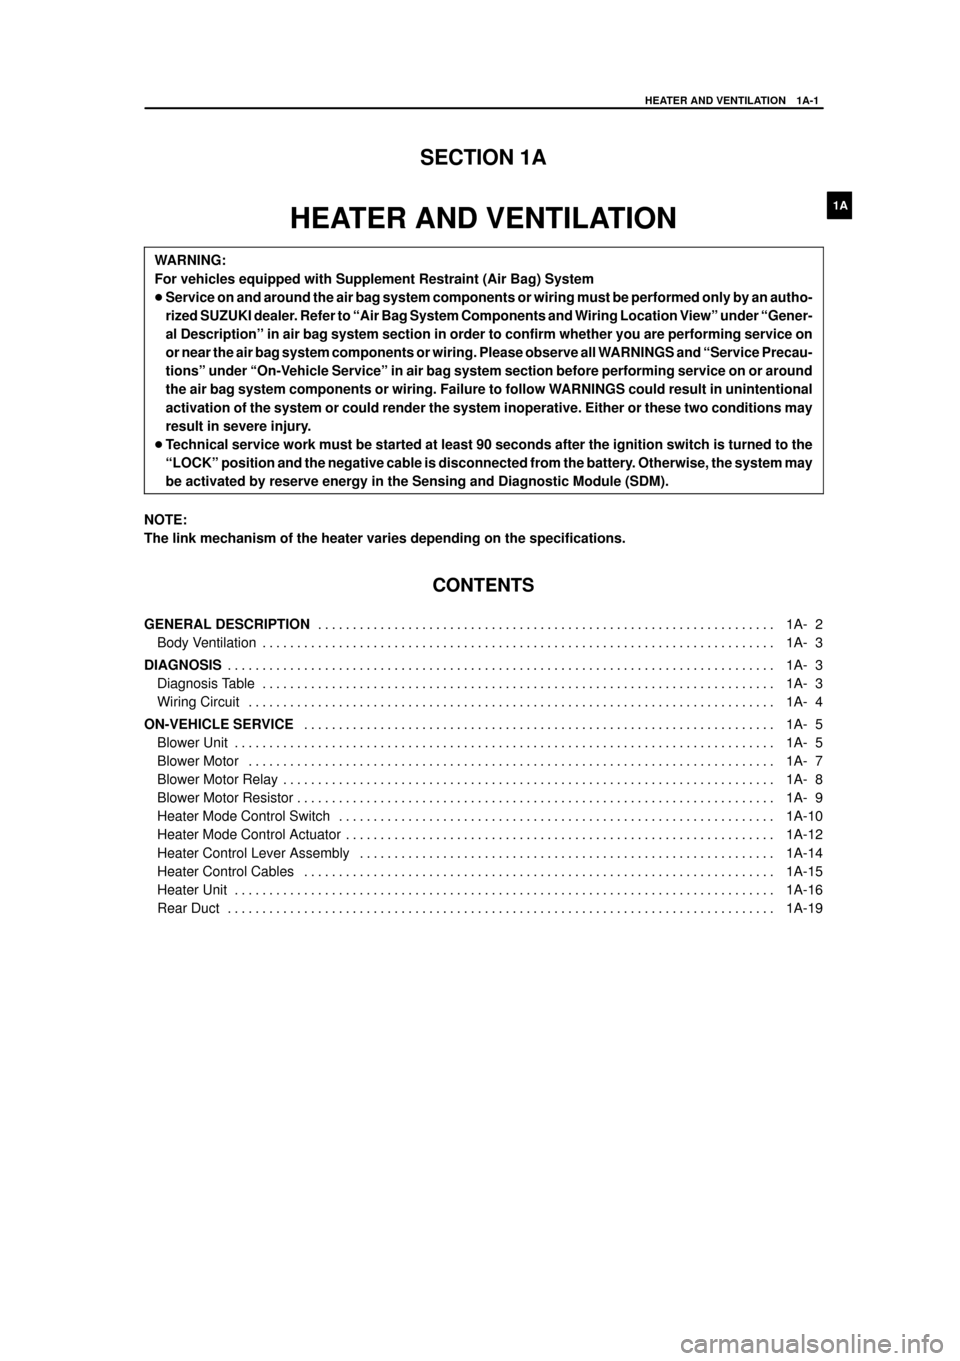 SUZUKI GRAND VITARA 2000 2.G Service Workshop Manual YH4
GRAND
VITARA
1A
HEATER AND VENTILATION 1A-1
SECTION 1A
HEATER AND VENTILATION
WARNING:
For vehicles equipped with Supplement Restraint (Air Bag) System
Service on and around the air bag system co